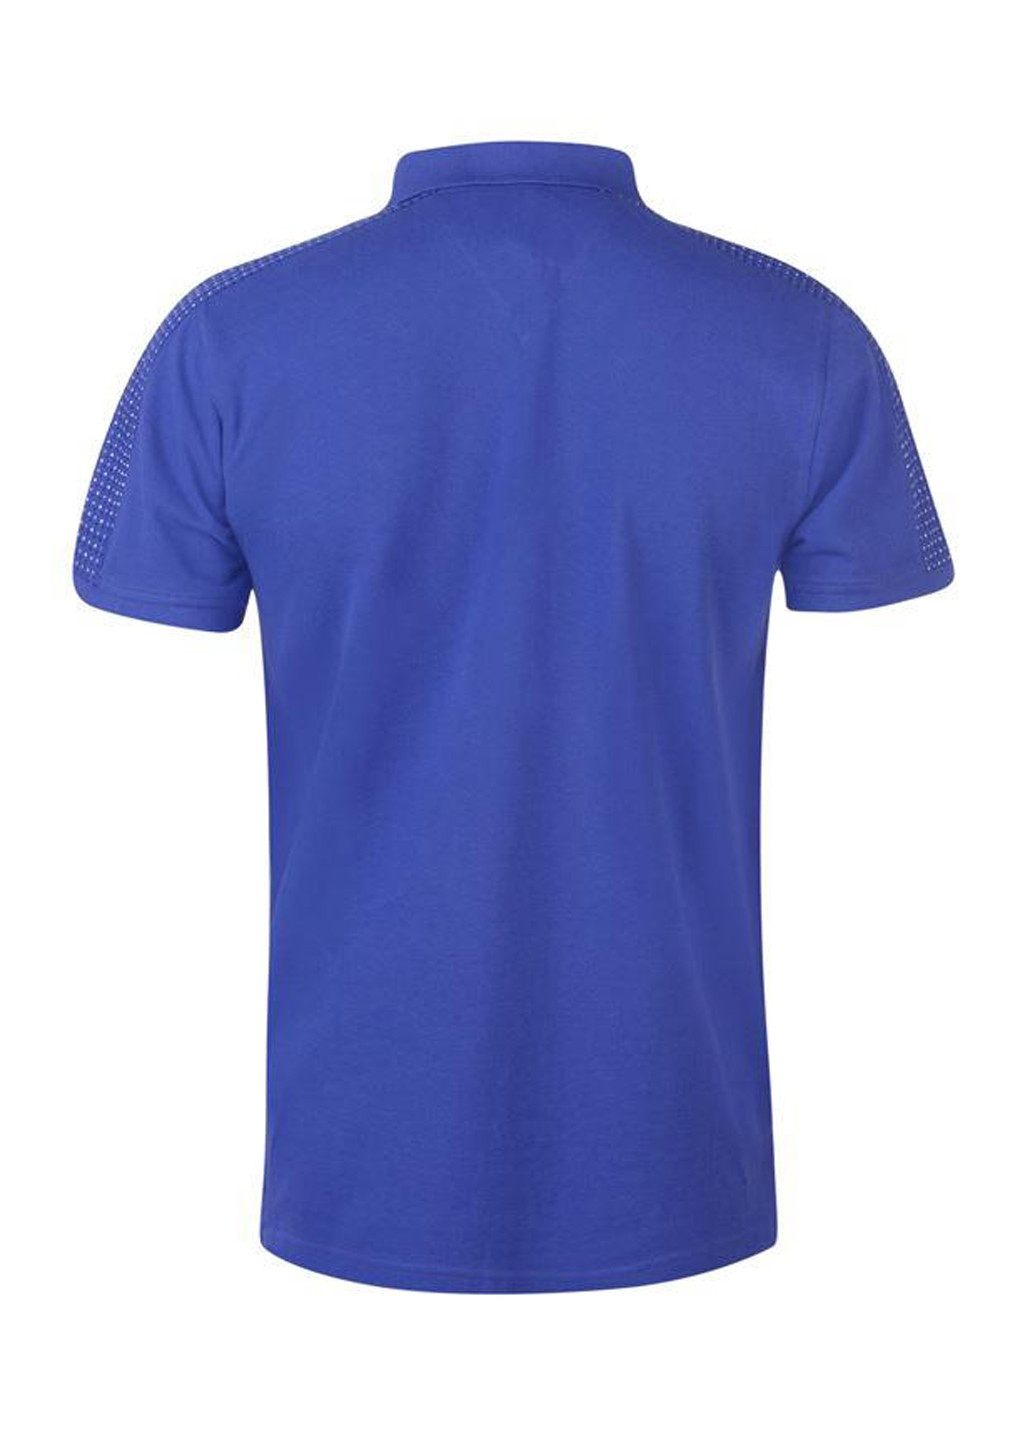 Синяя футболка-поло для мужчин Soviet с логотипом